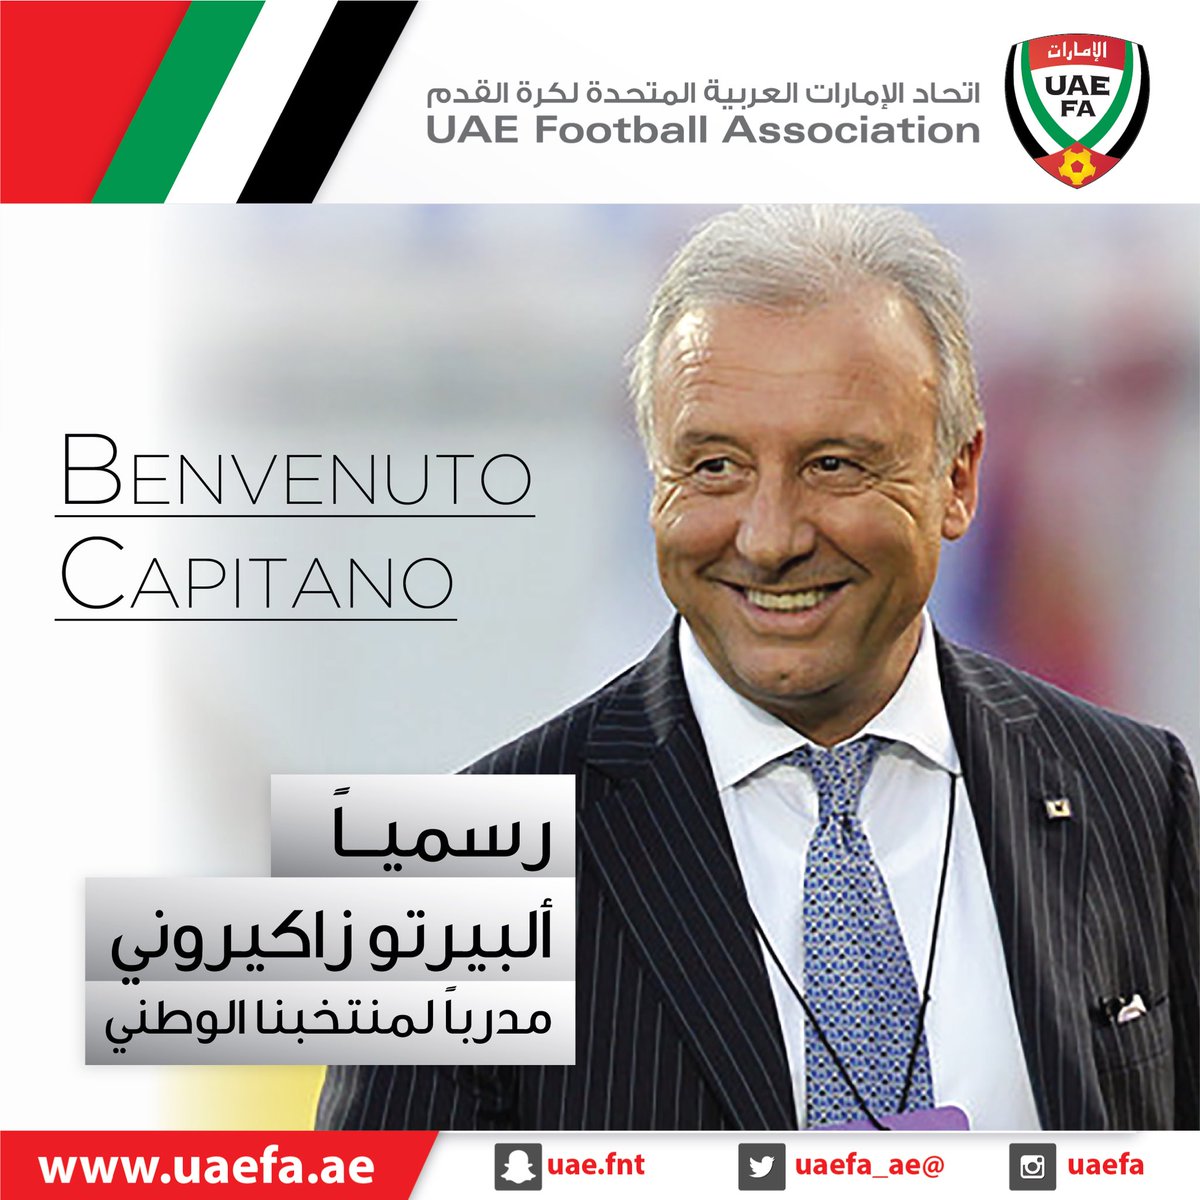 Alberto Zaccheroni Appointed as Coach of UAE Football Team